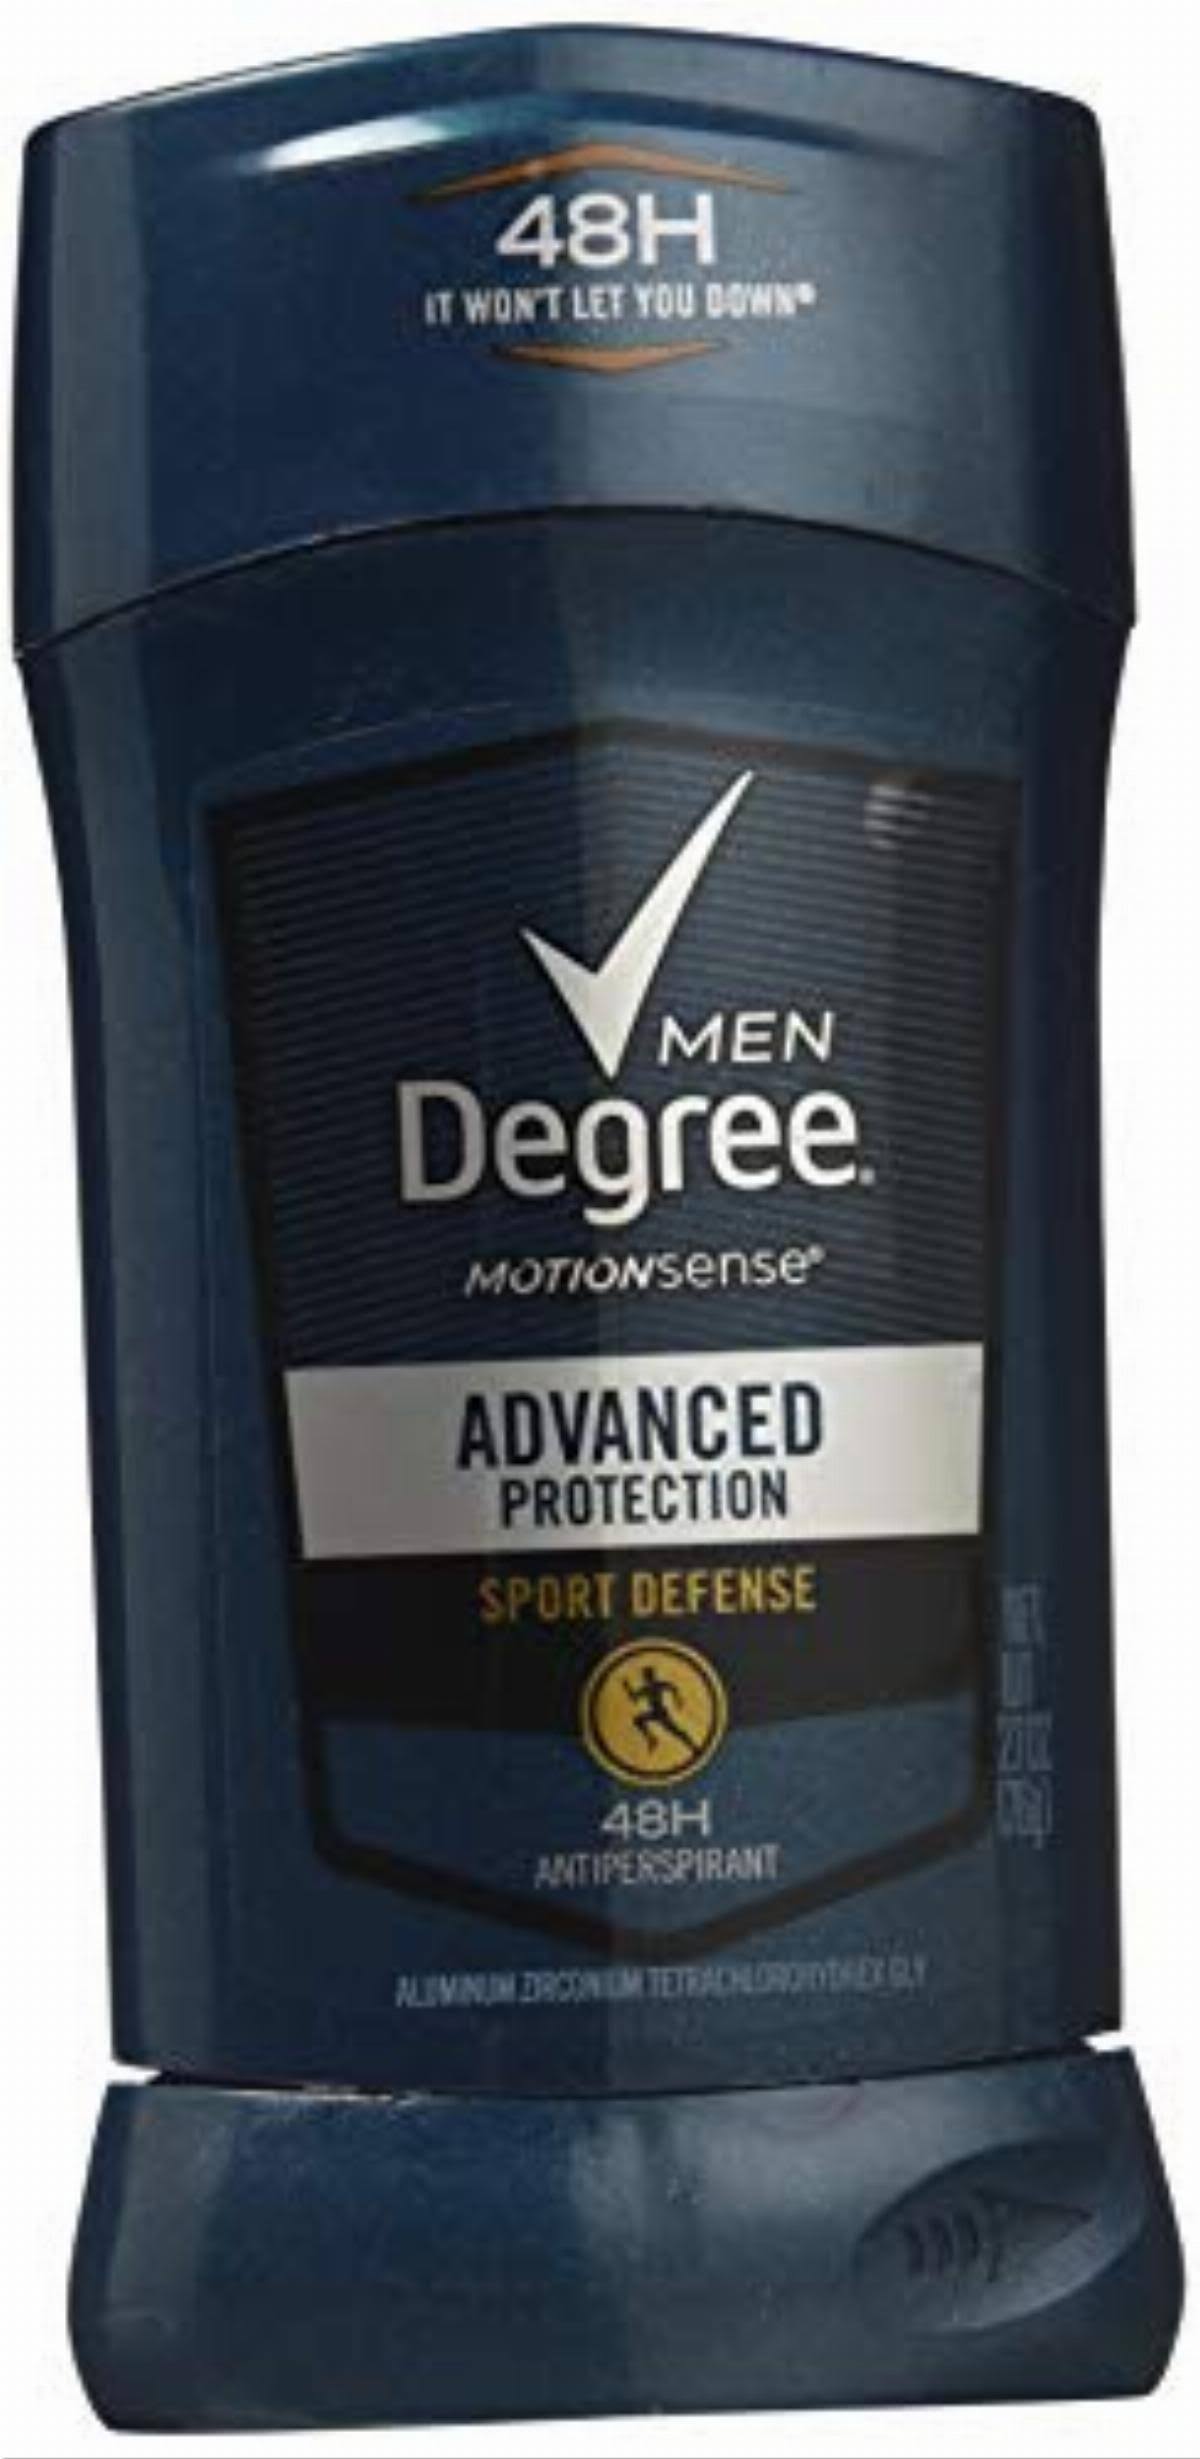 Degree Men MotionSense Sport Defense 48H Anti-Perspirant - Limited Edition, 2.7oz